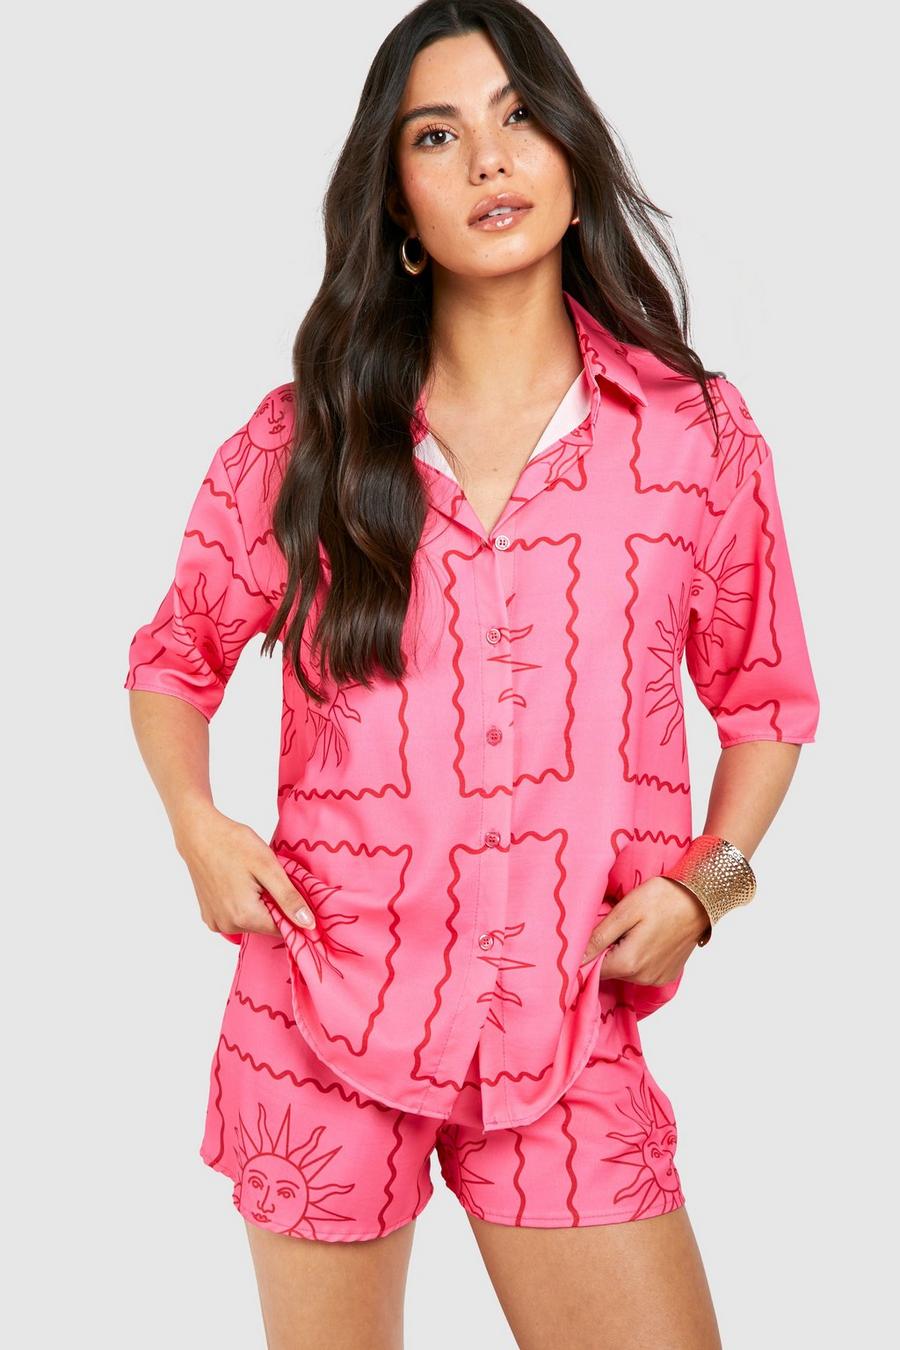 Lockeres Hemd & Shorts mit Sonnen-Print, Hot pink